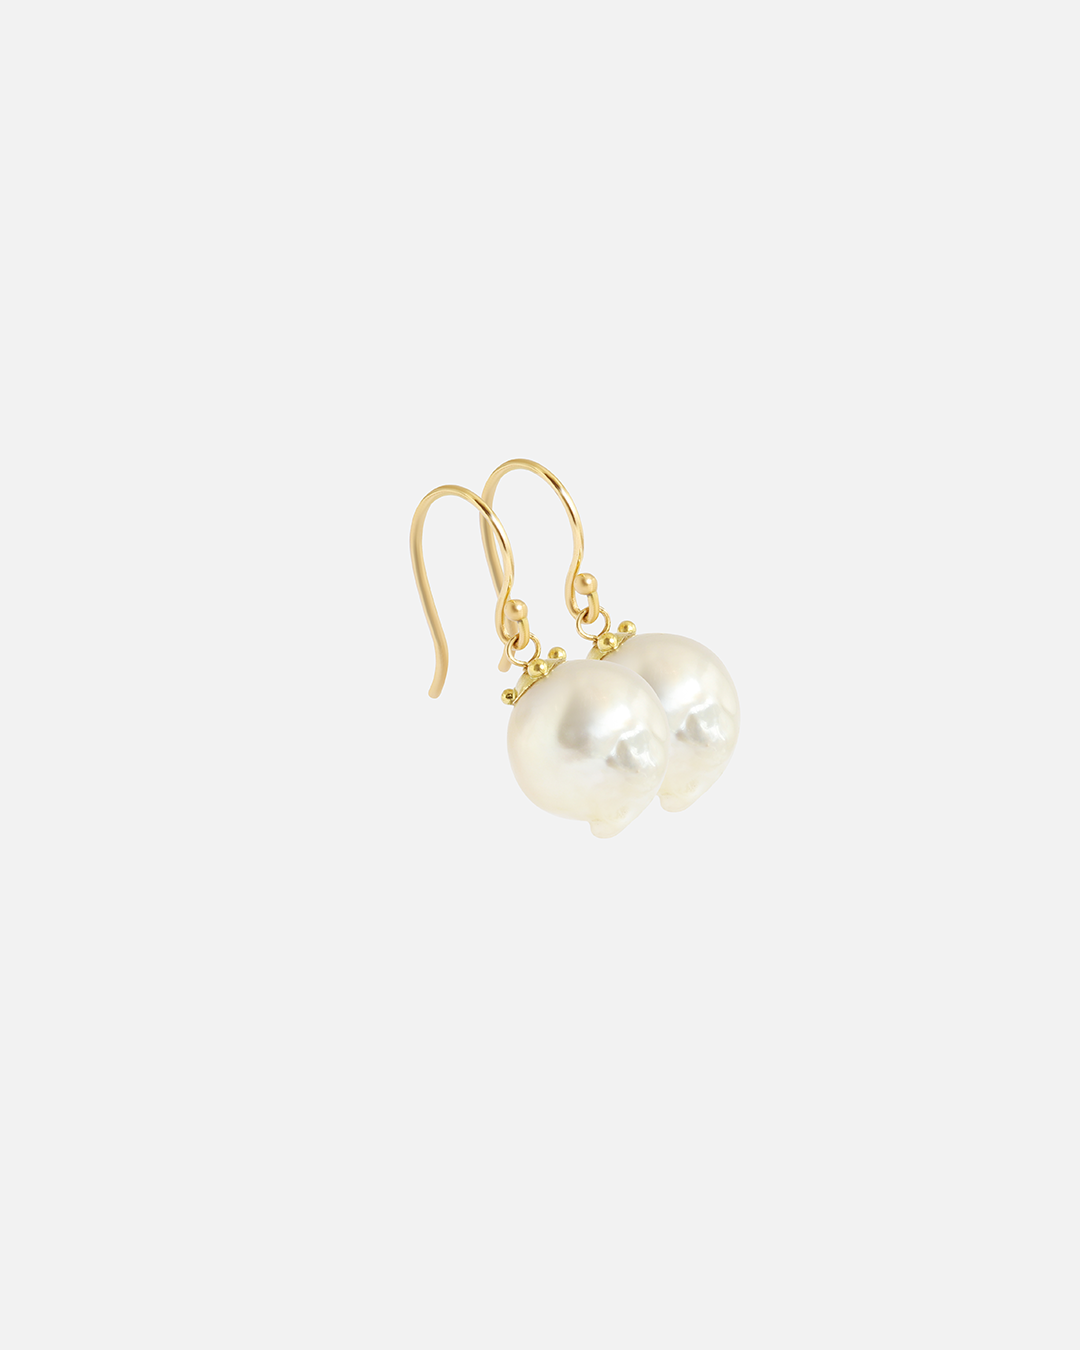 Umi / South Sea Pearl Earrings By Hiroyo